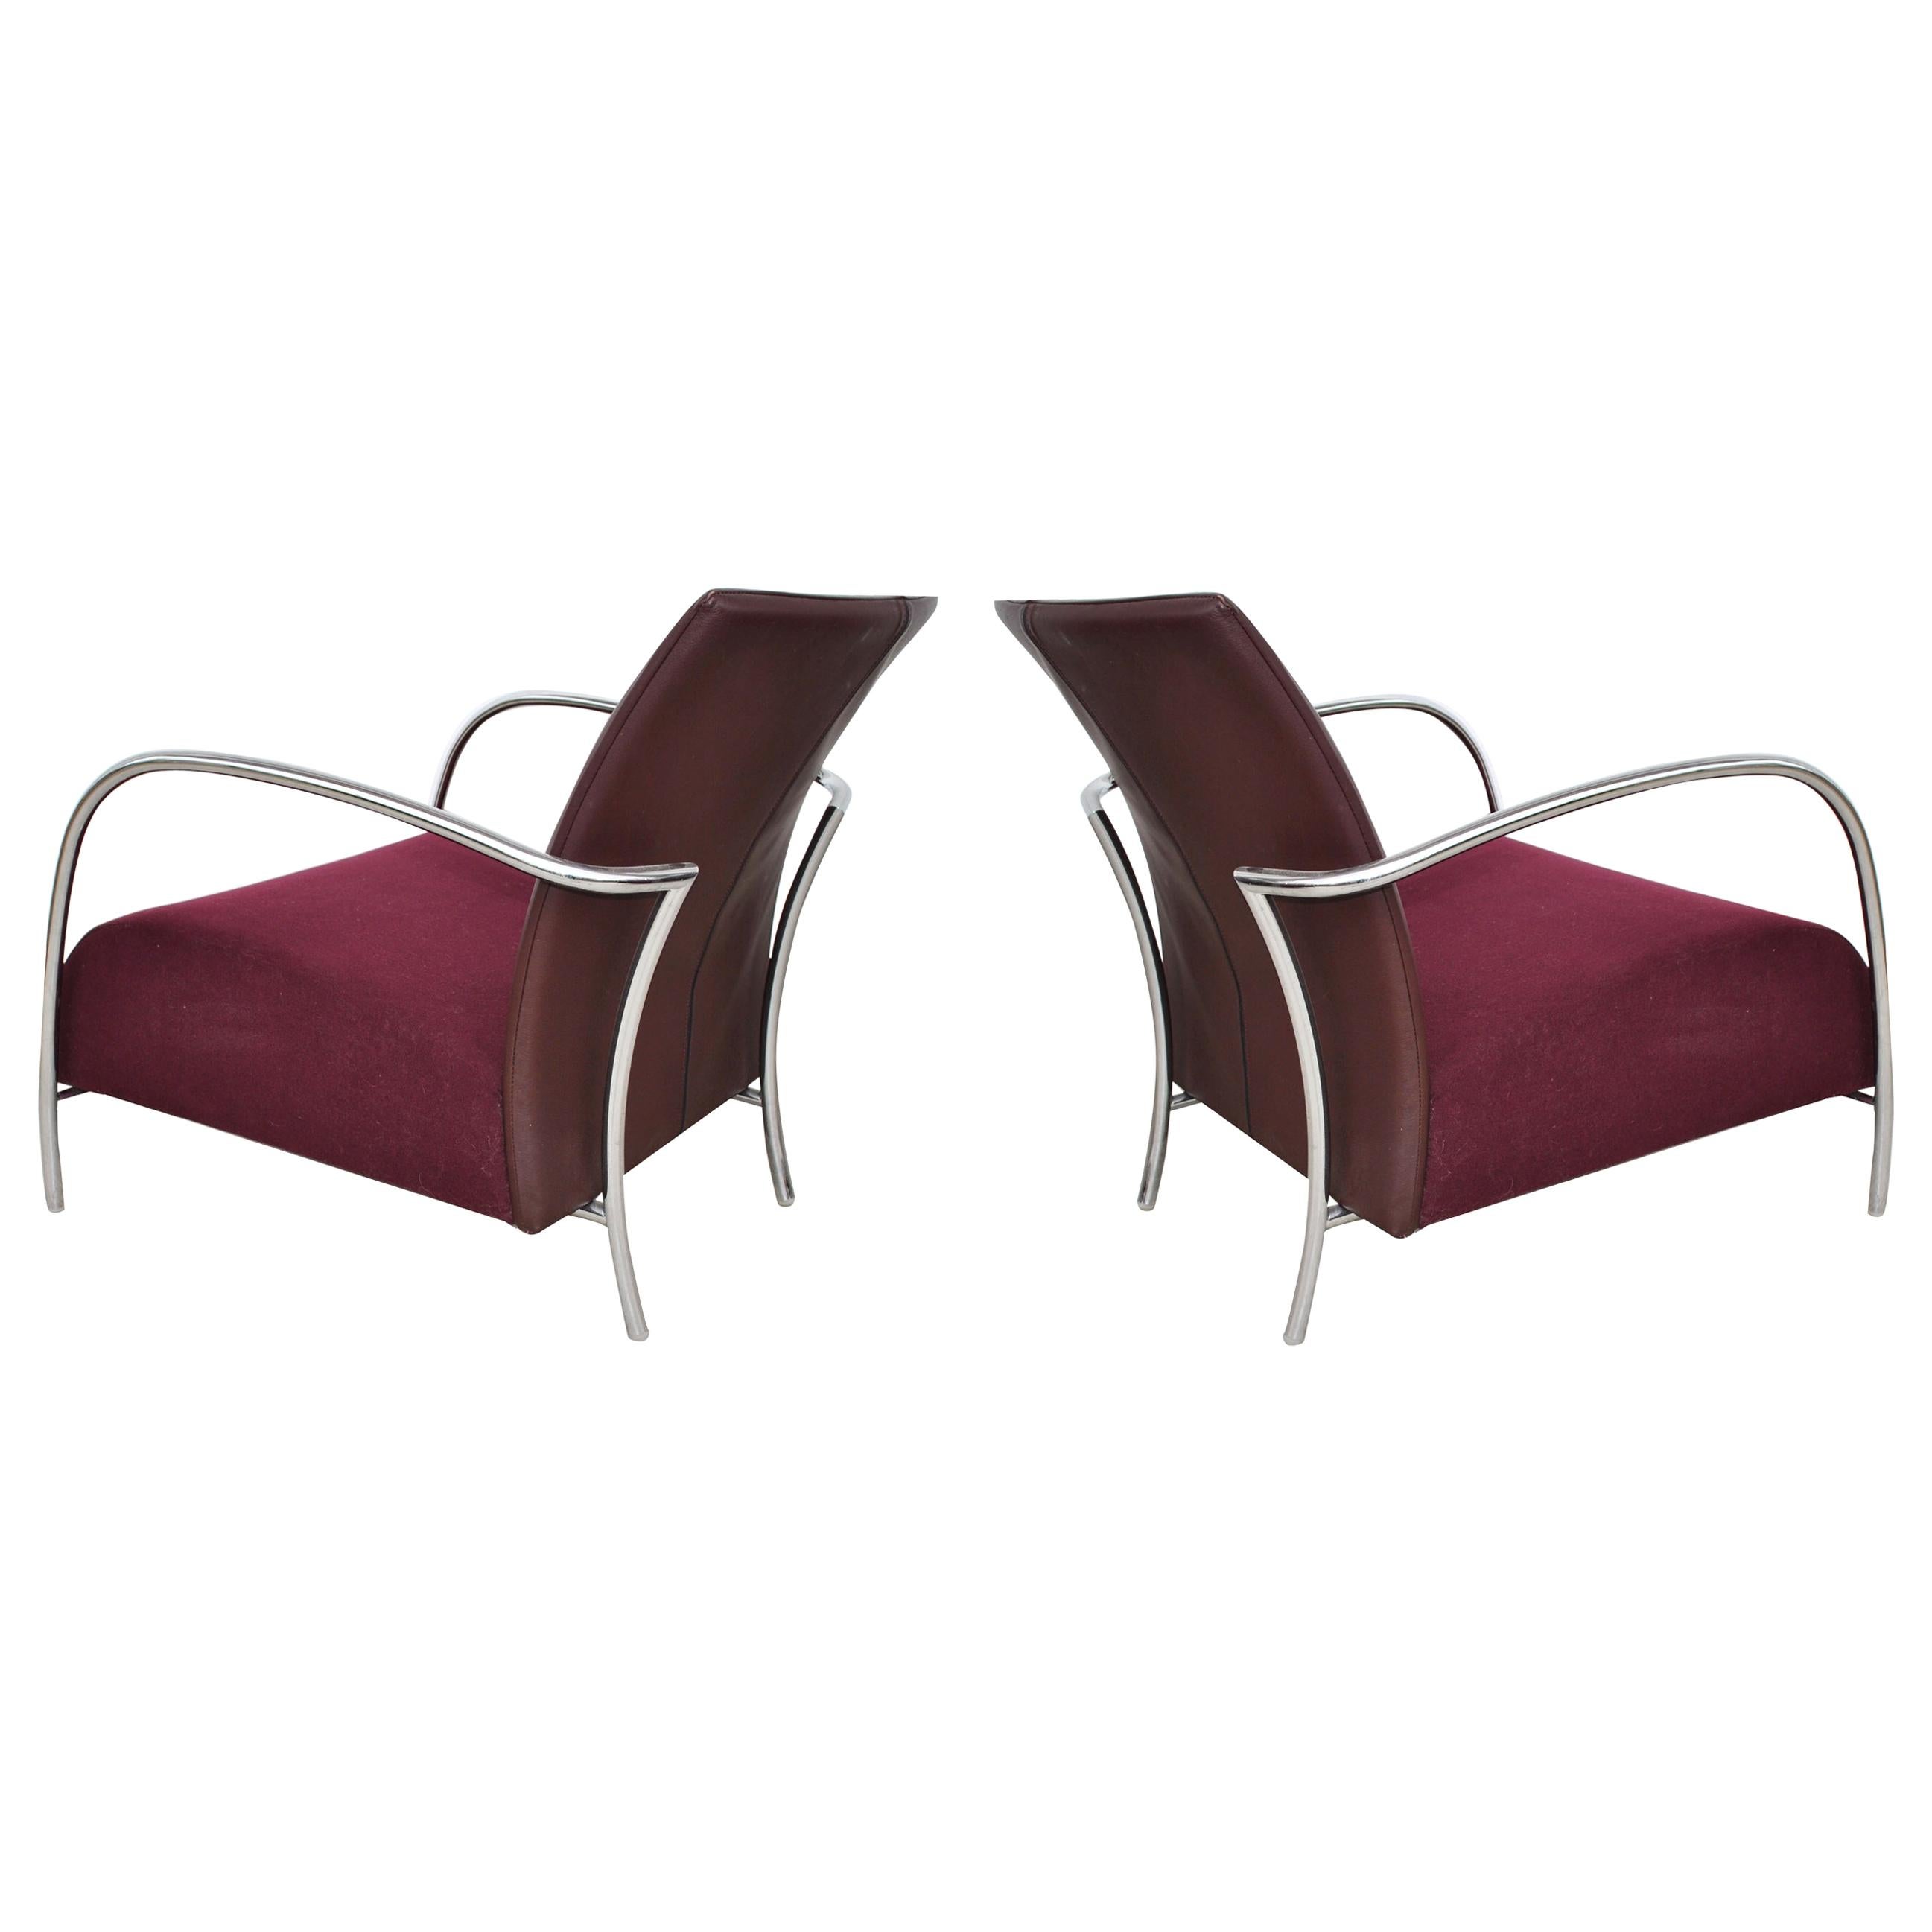 Pair of Modern Italian Style Tubular Chrome Lounge Chairs